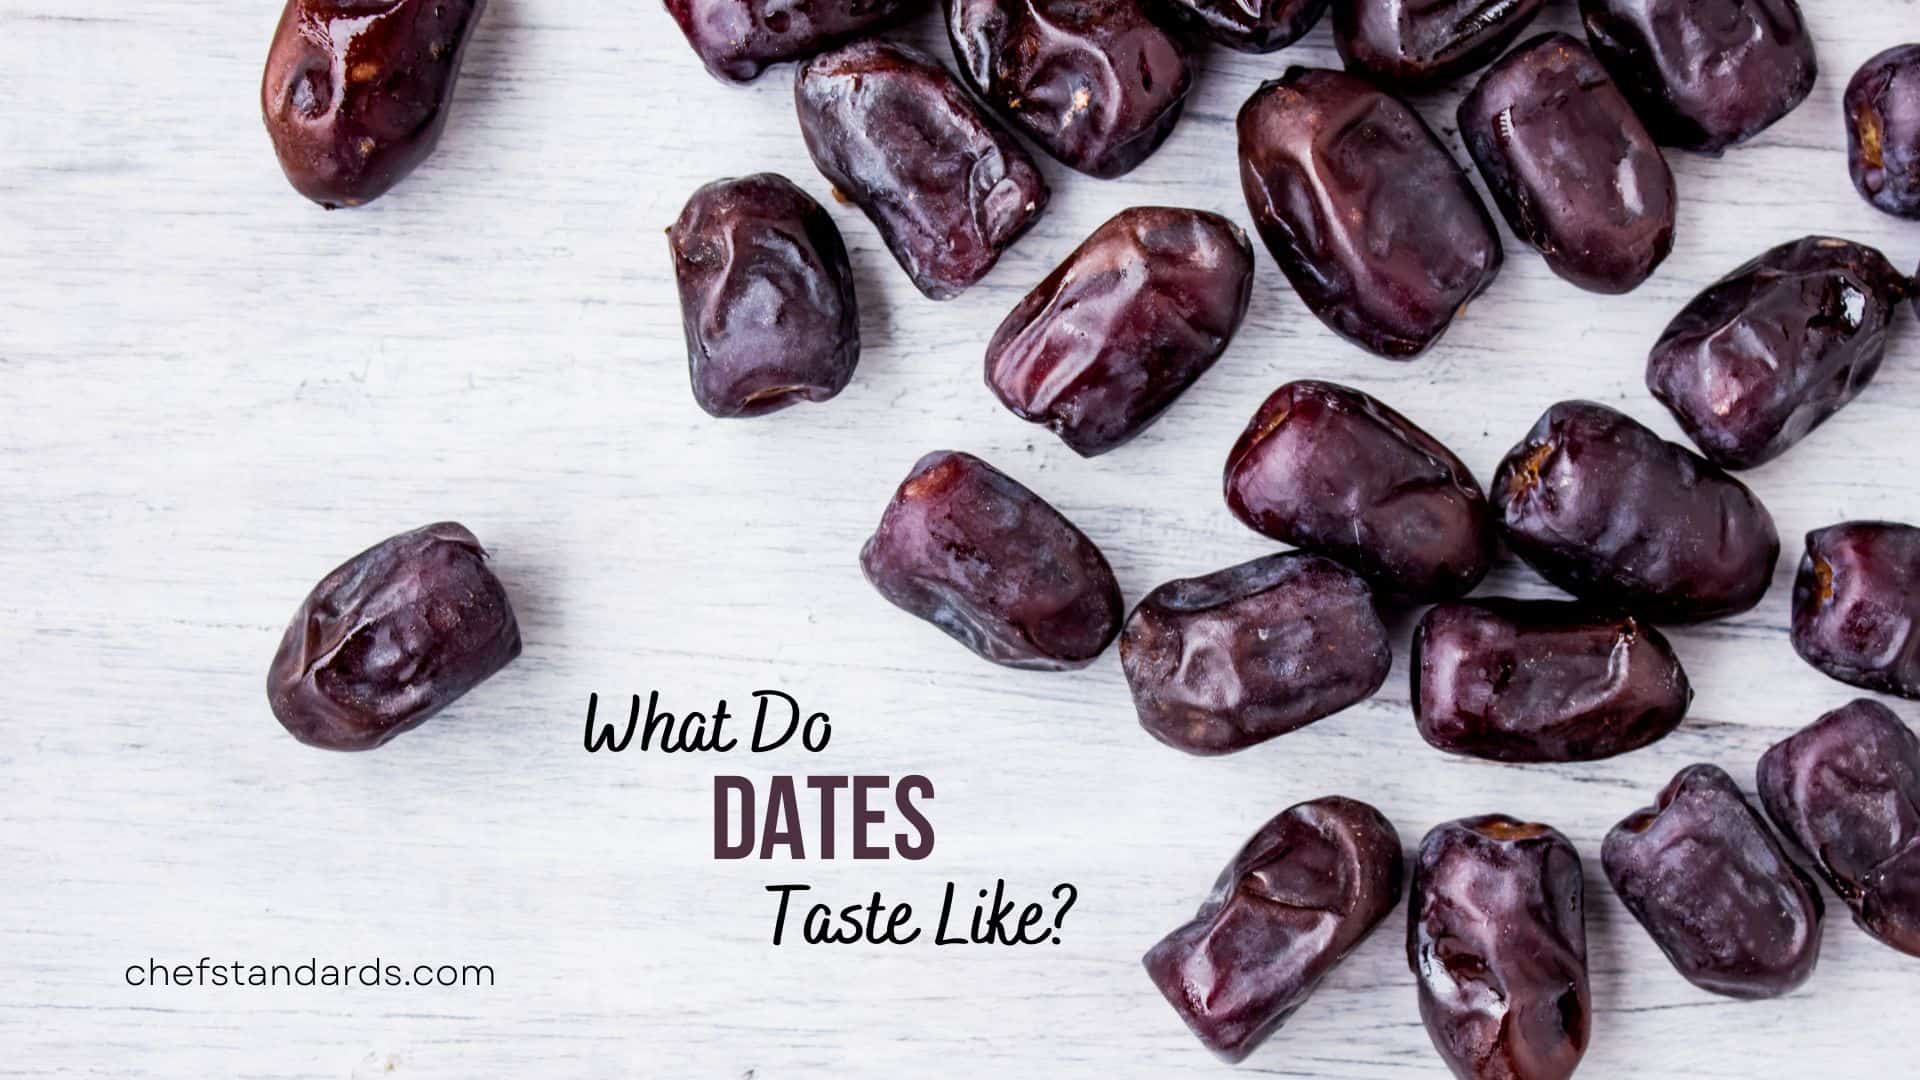 the taste of dates